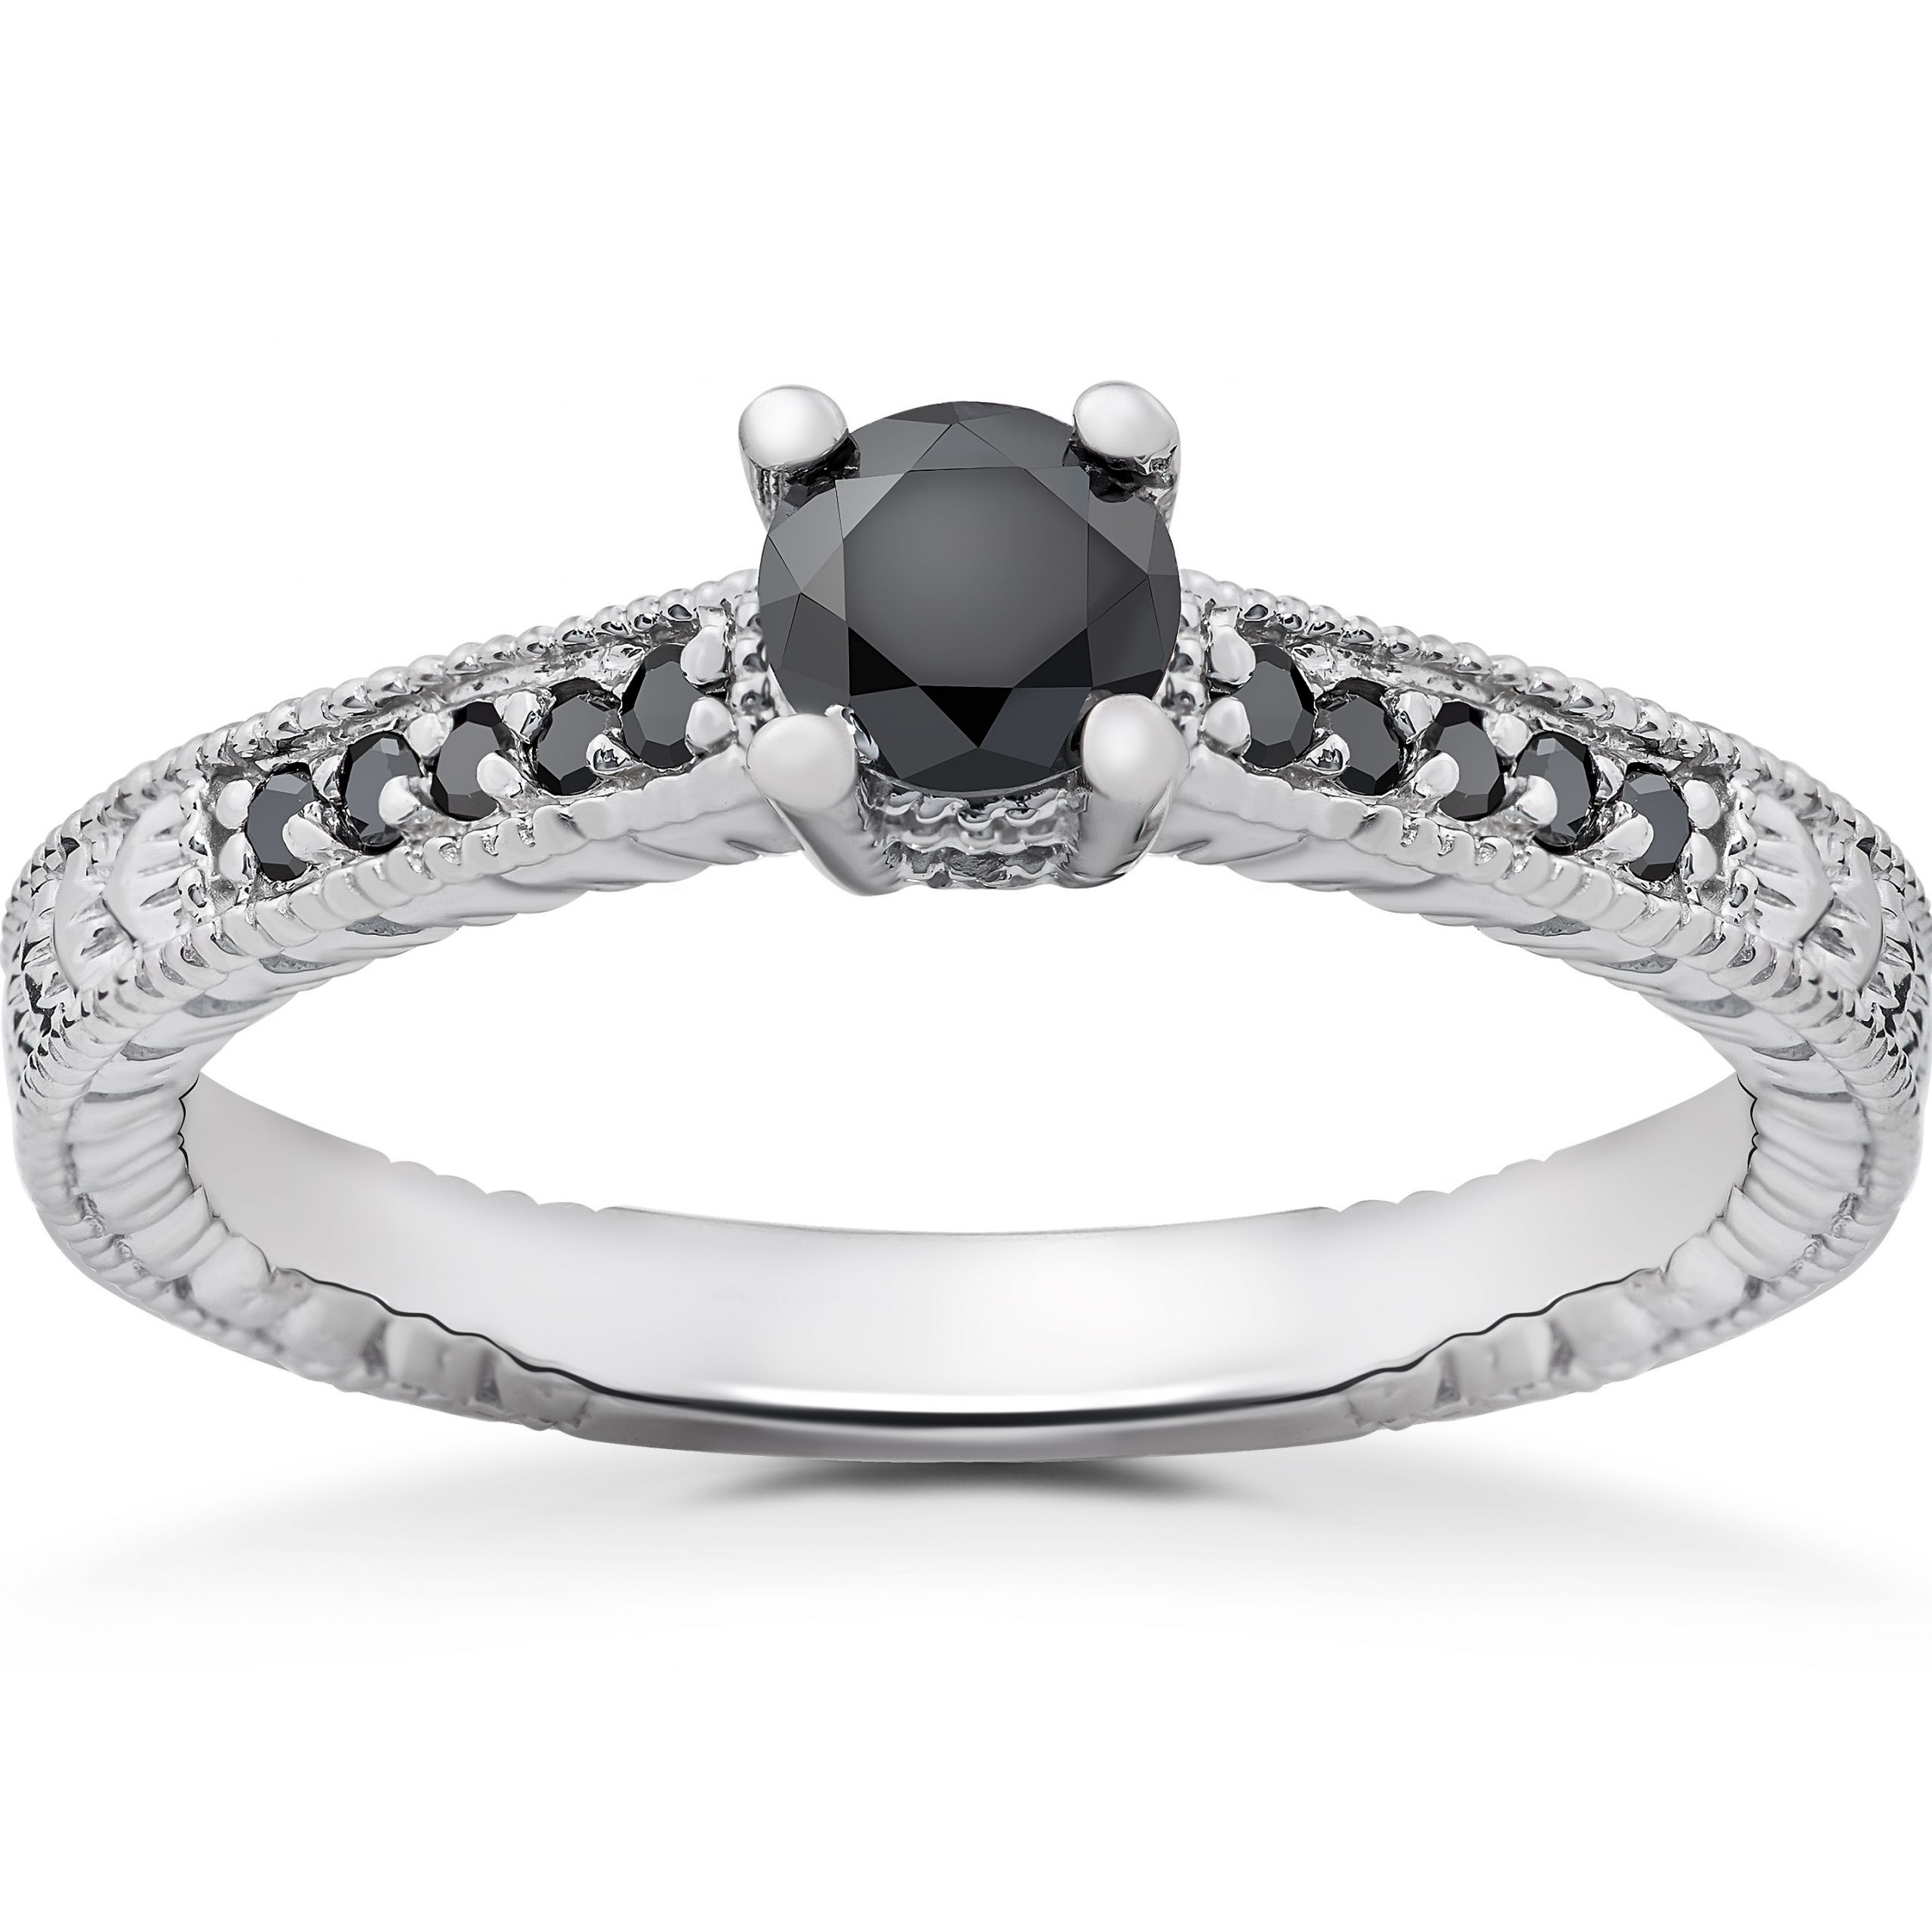 Engagement Rings With Black Diamonds
 1 2 ct Black Diamond Vintage Engagement Ring 14k White